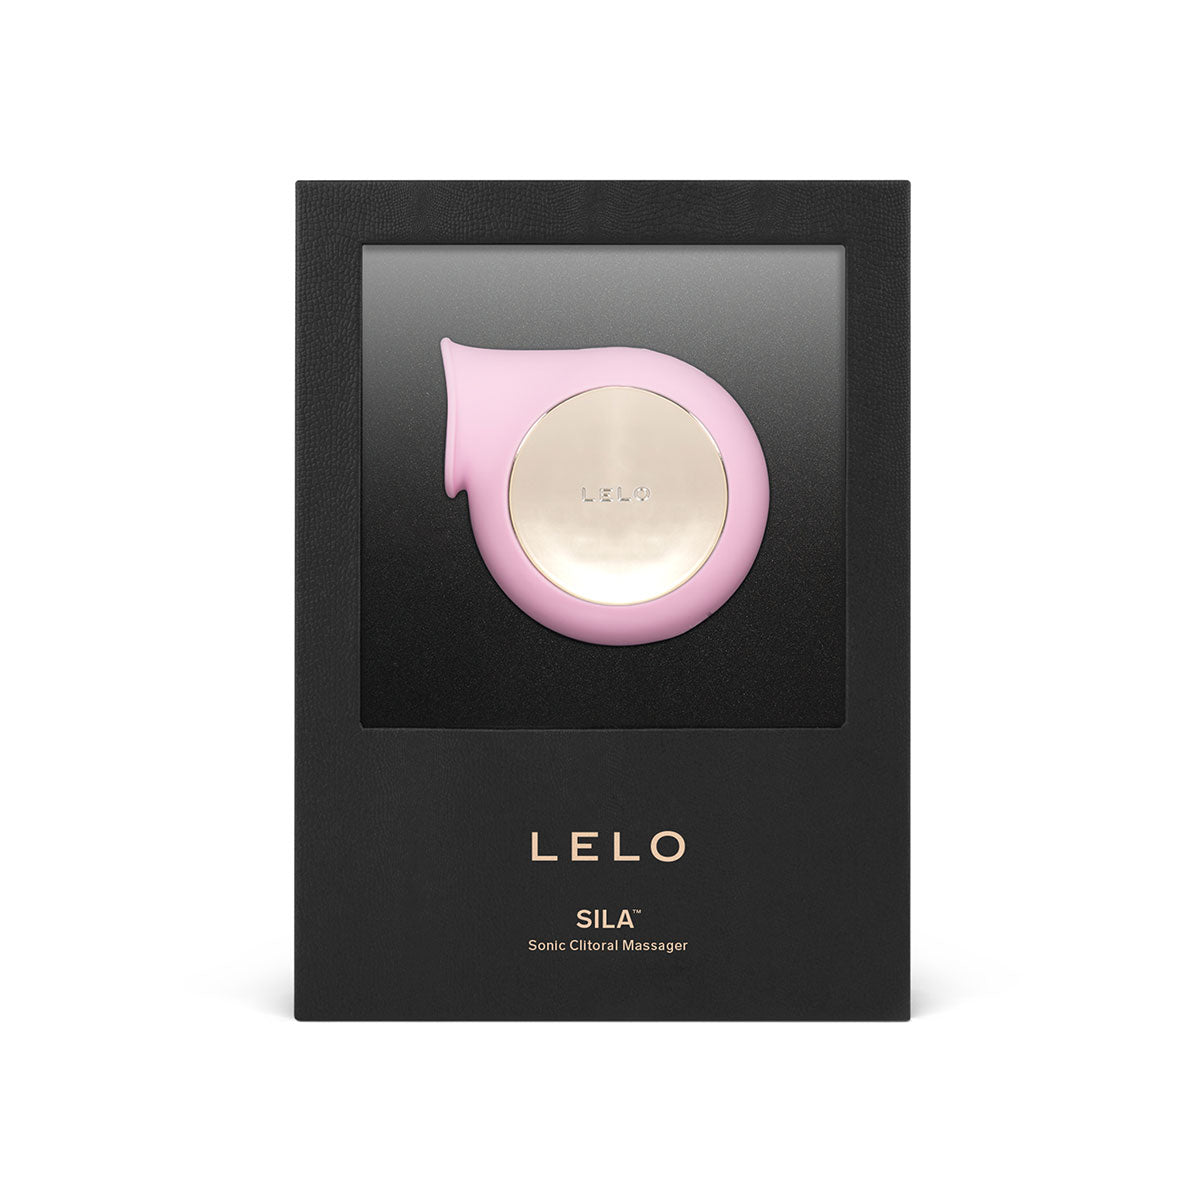 LELO Sila Cruise - Pink Intimates Adult Boutique